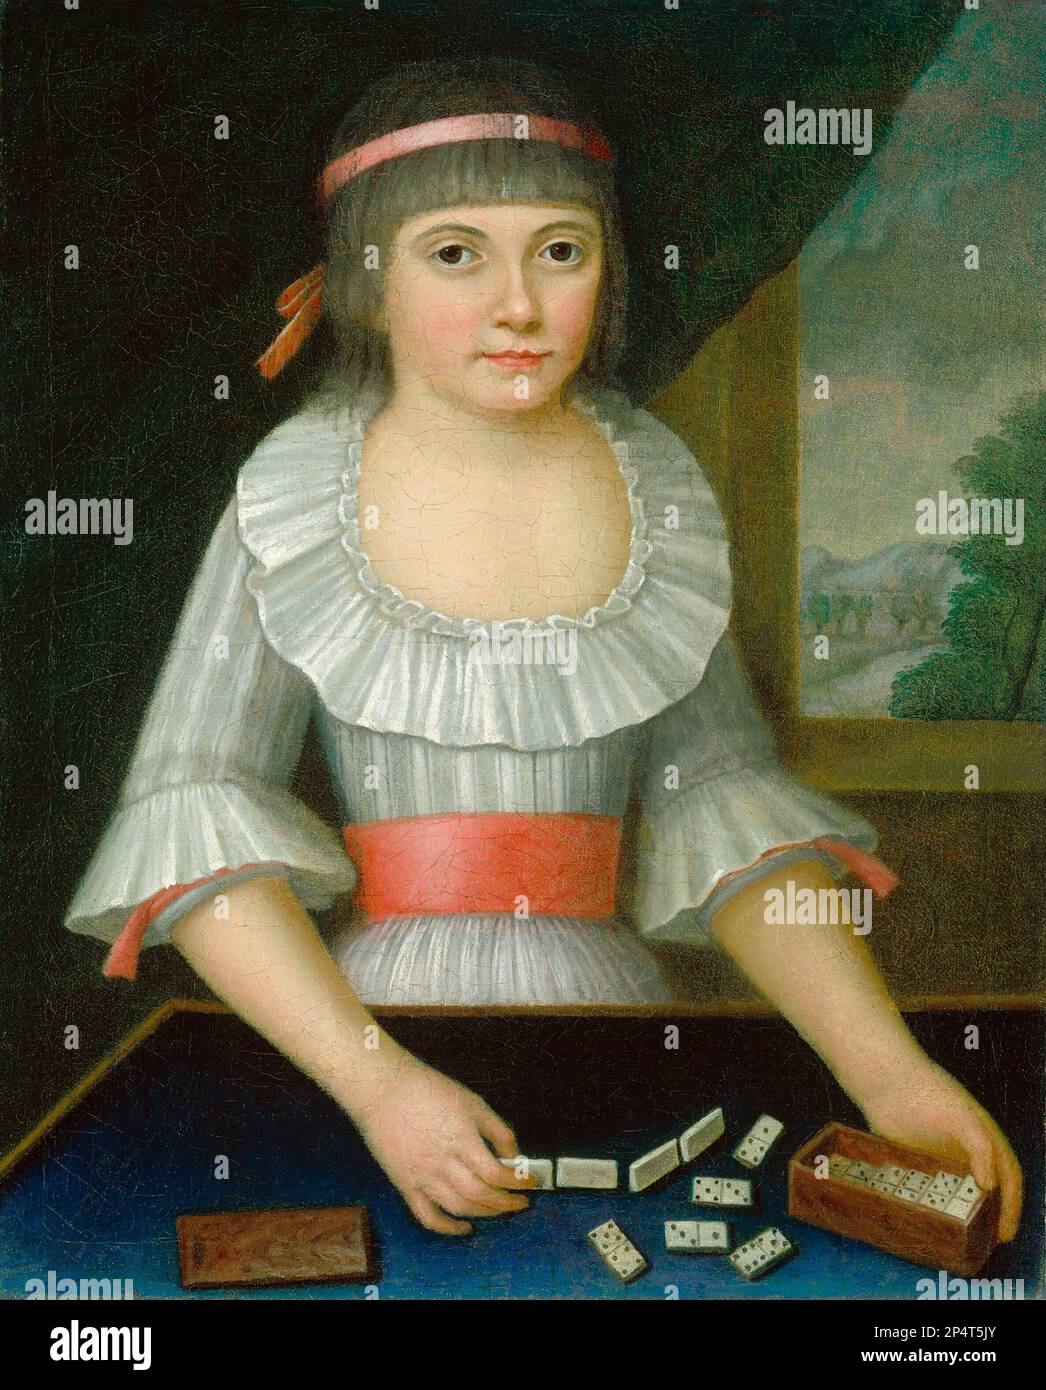 American 18th Century The Domino Girl c. 1790 Stock Photo - Alamy